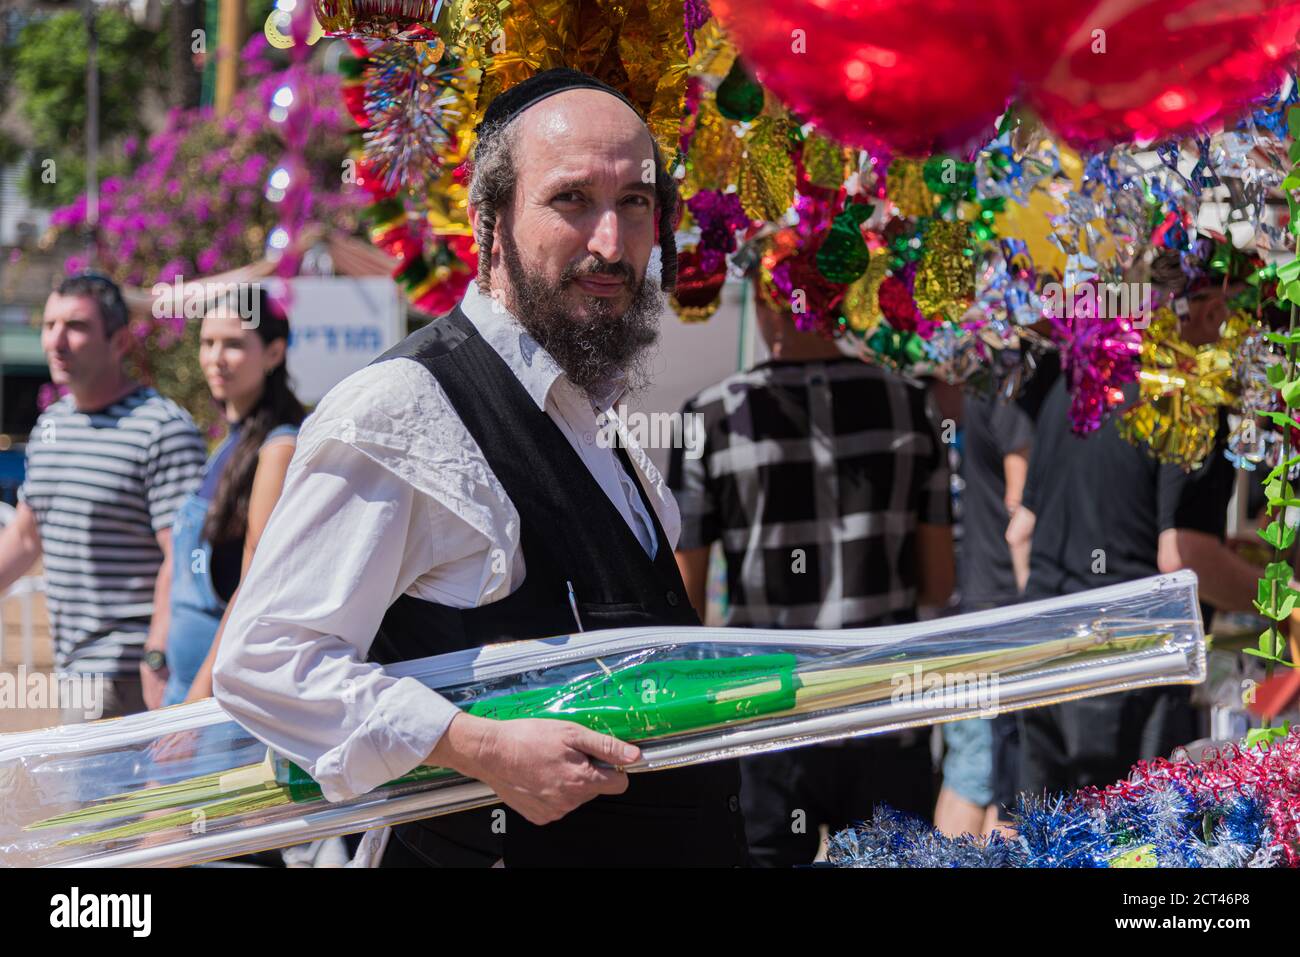 TEL AVIV, ISRAEL – OCTOBER 4, 2017: Jewish man wearing kippah and holding a Palm branch on Sukkot's four species festival. Sukkah decorations Stock Photo